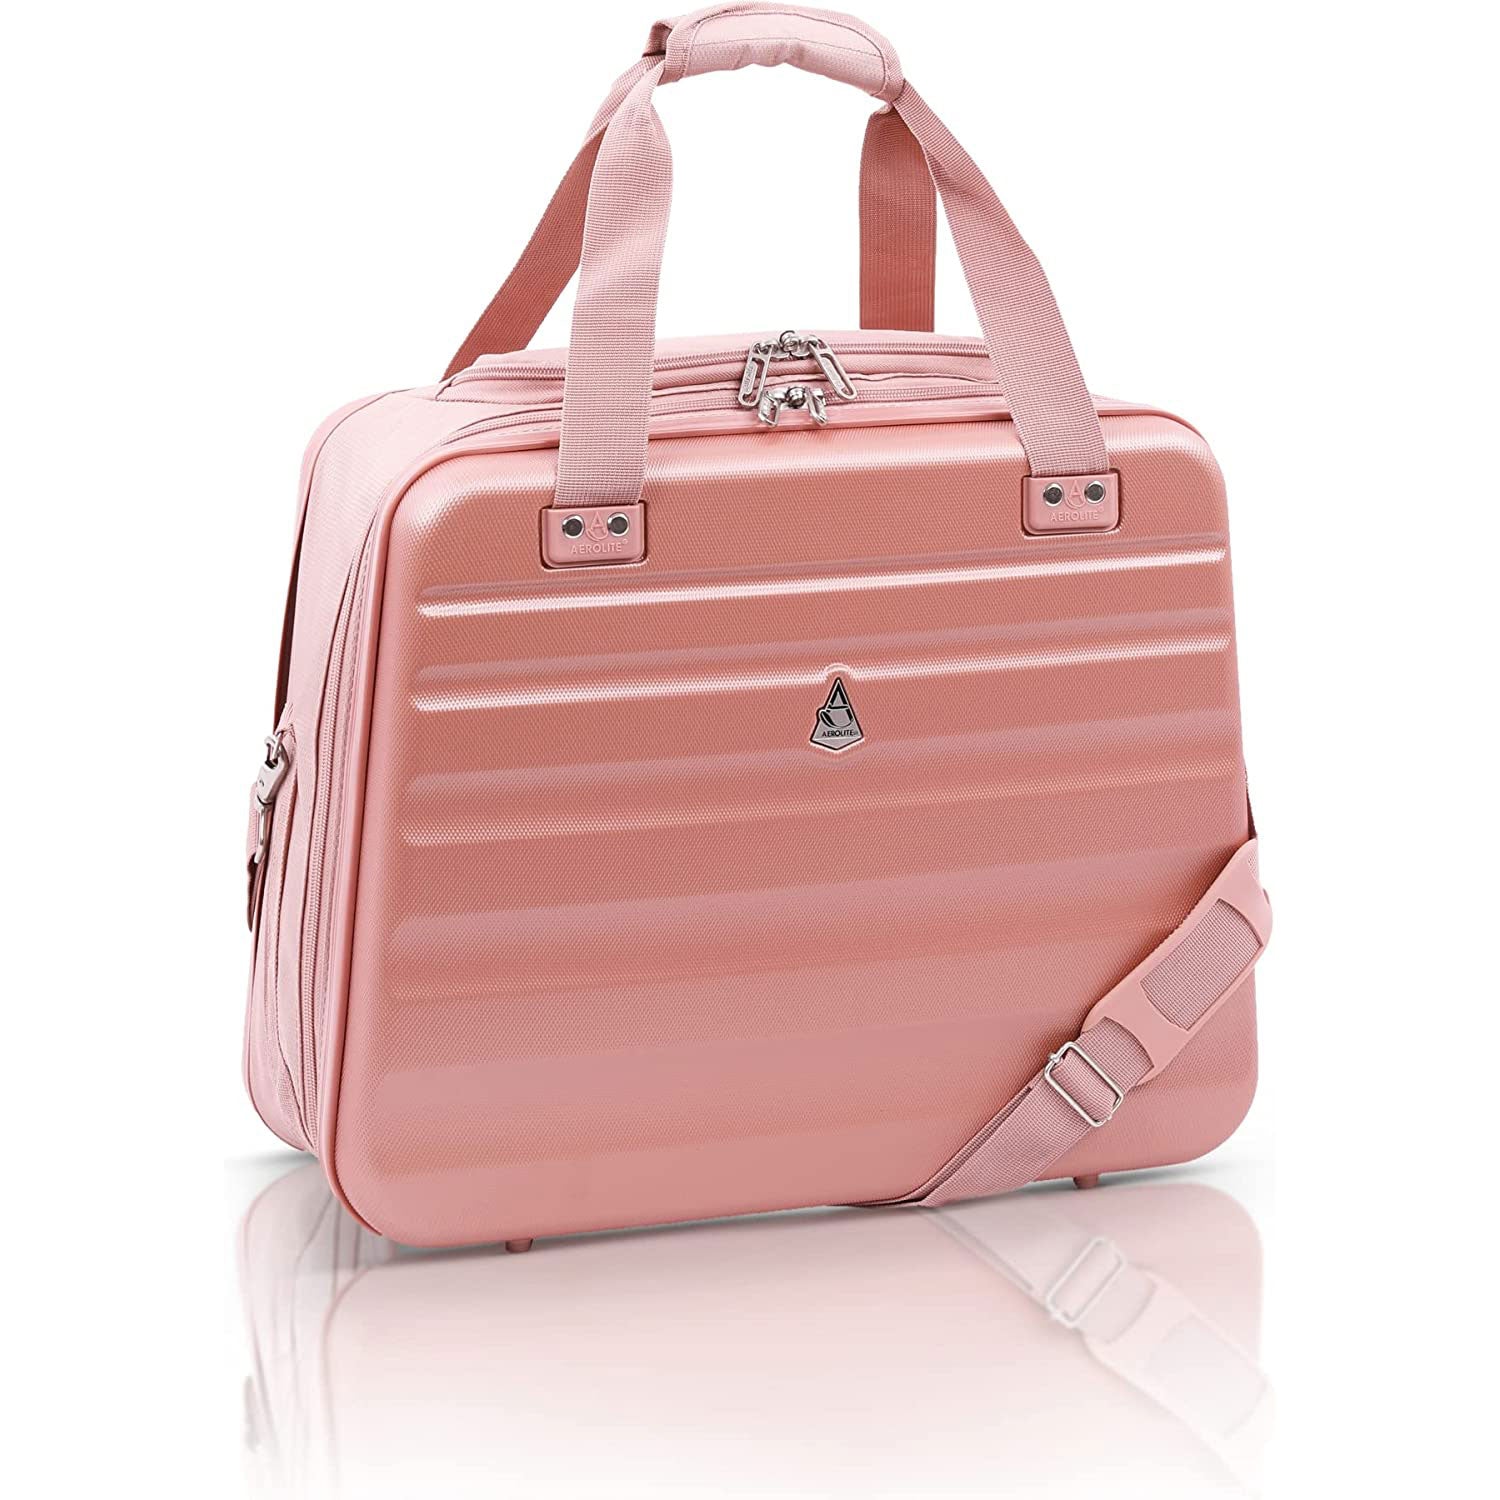 Aerolite (45x36x20cm) easyJet Maximum Size Hard Shell Carry On Hand Cabin  Luggage Underseat Flight Bag Suitcase 45x36x20 with 4 Wheels